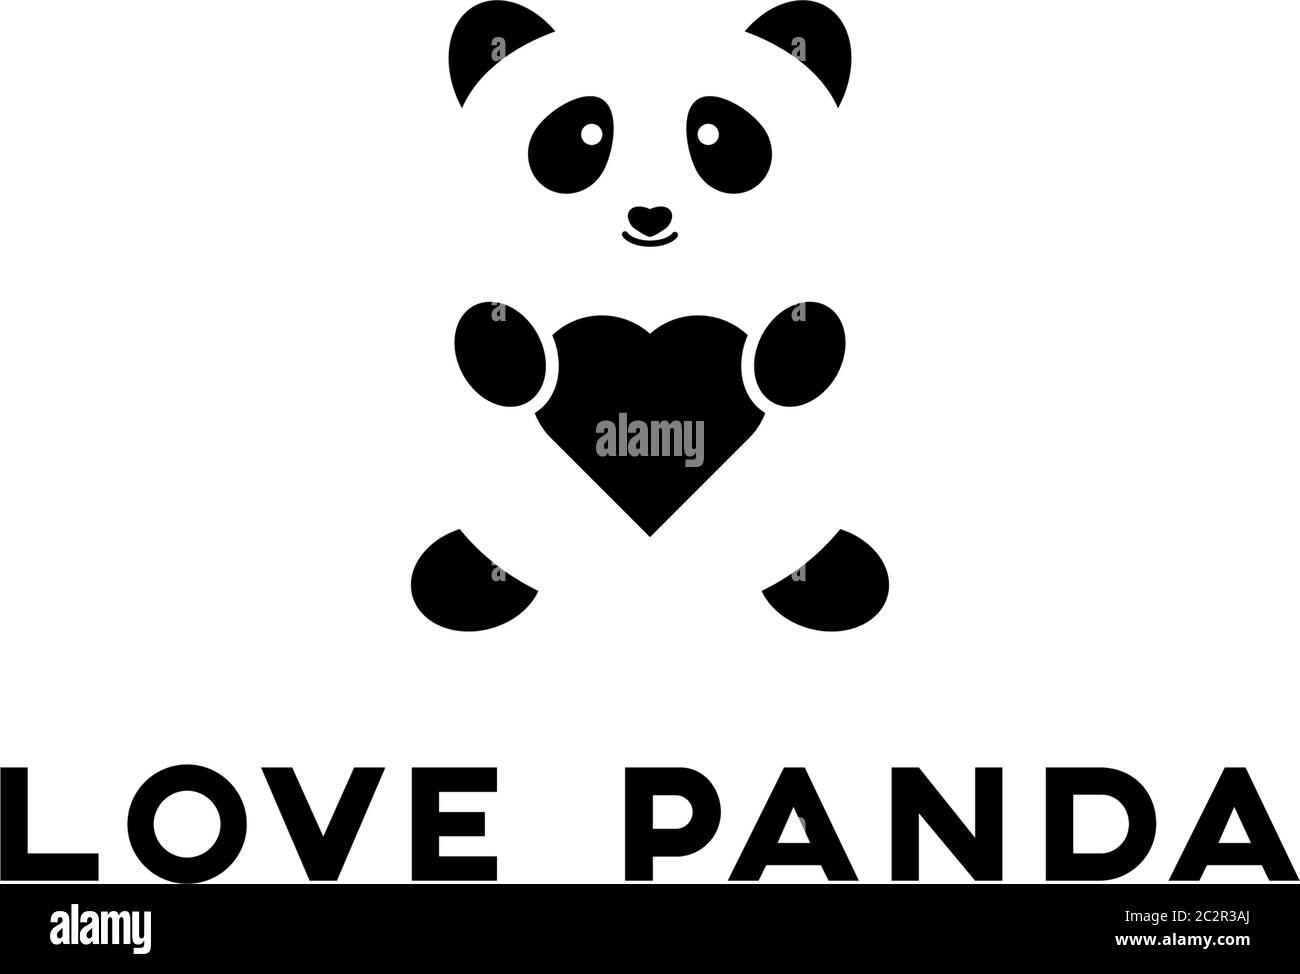 Liebe panda logo Vektor, negativen Raum liebe Panda logo Inspiration Stock Vektor